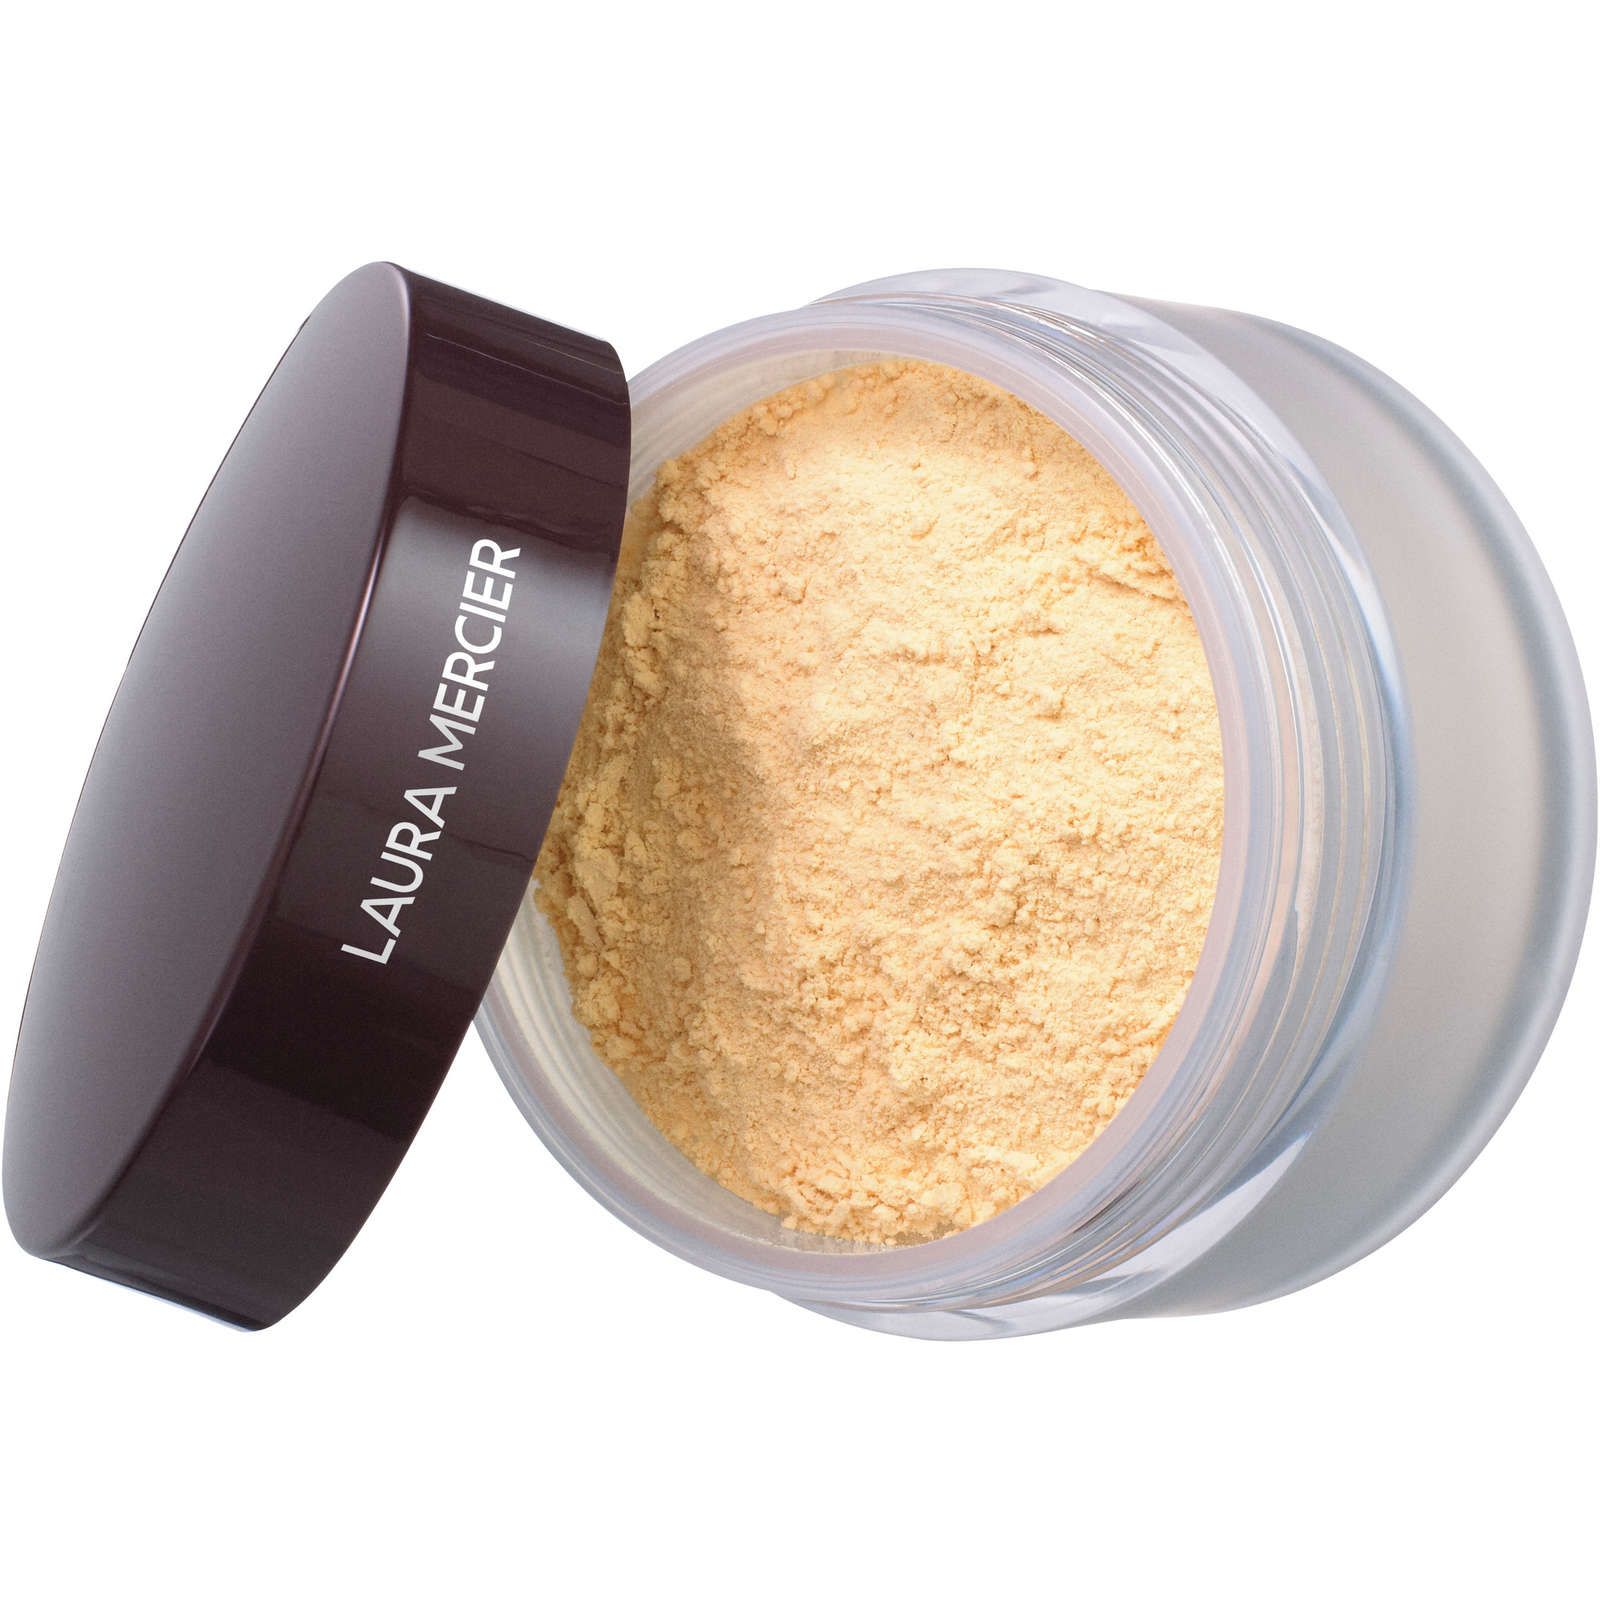 Translucent Loose Setting Powder | Shoppers Drug Mart - Beauty